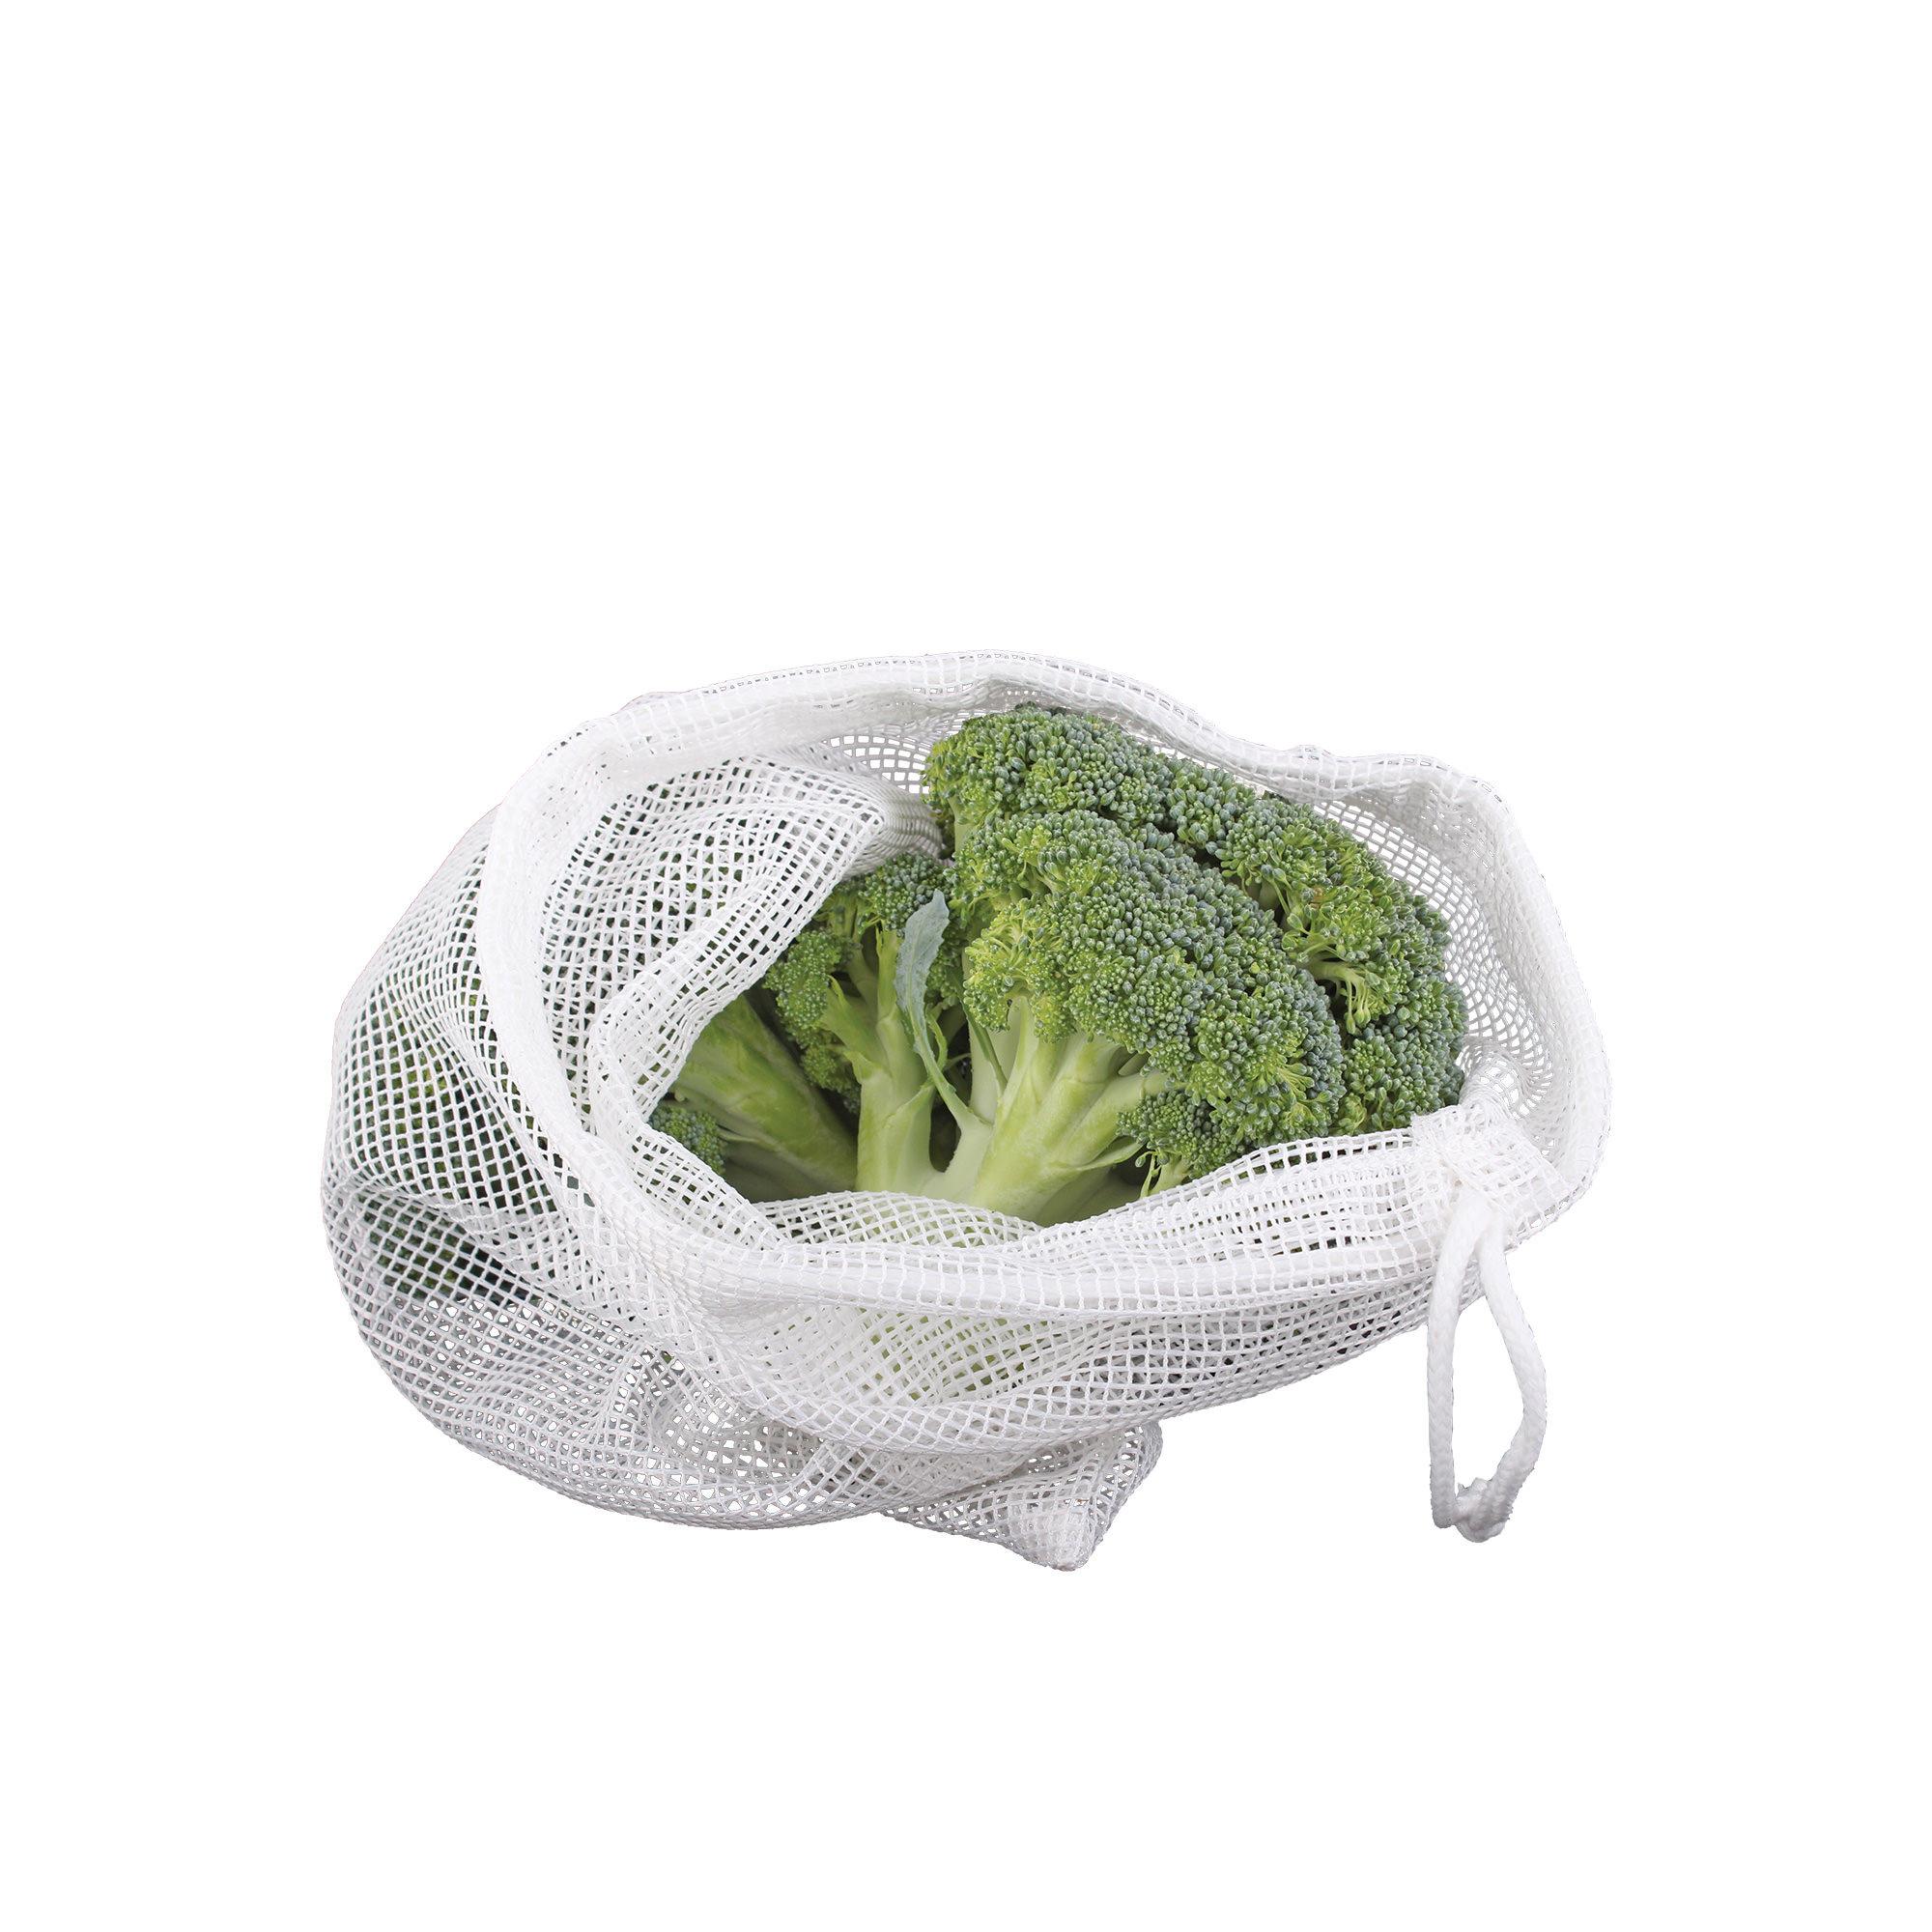 Appetito Woven Net Produce Bag Set of 3 Image 5